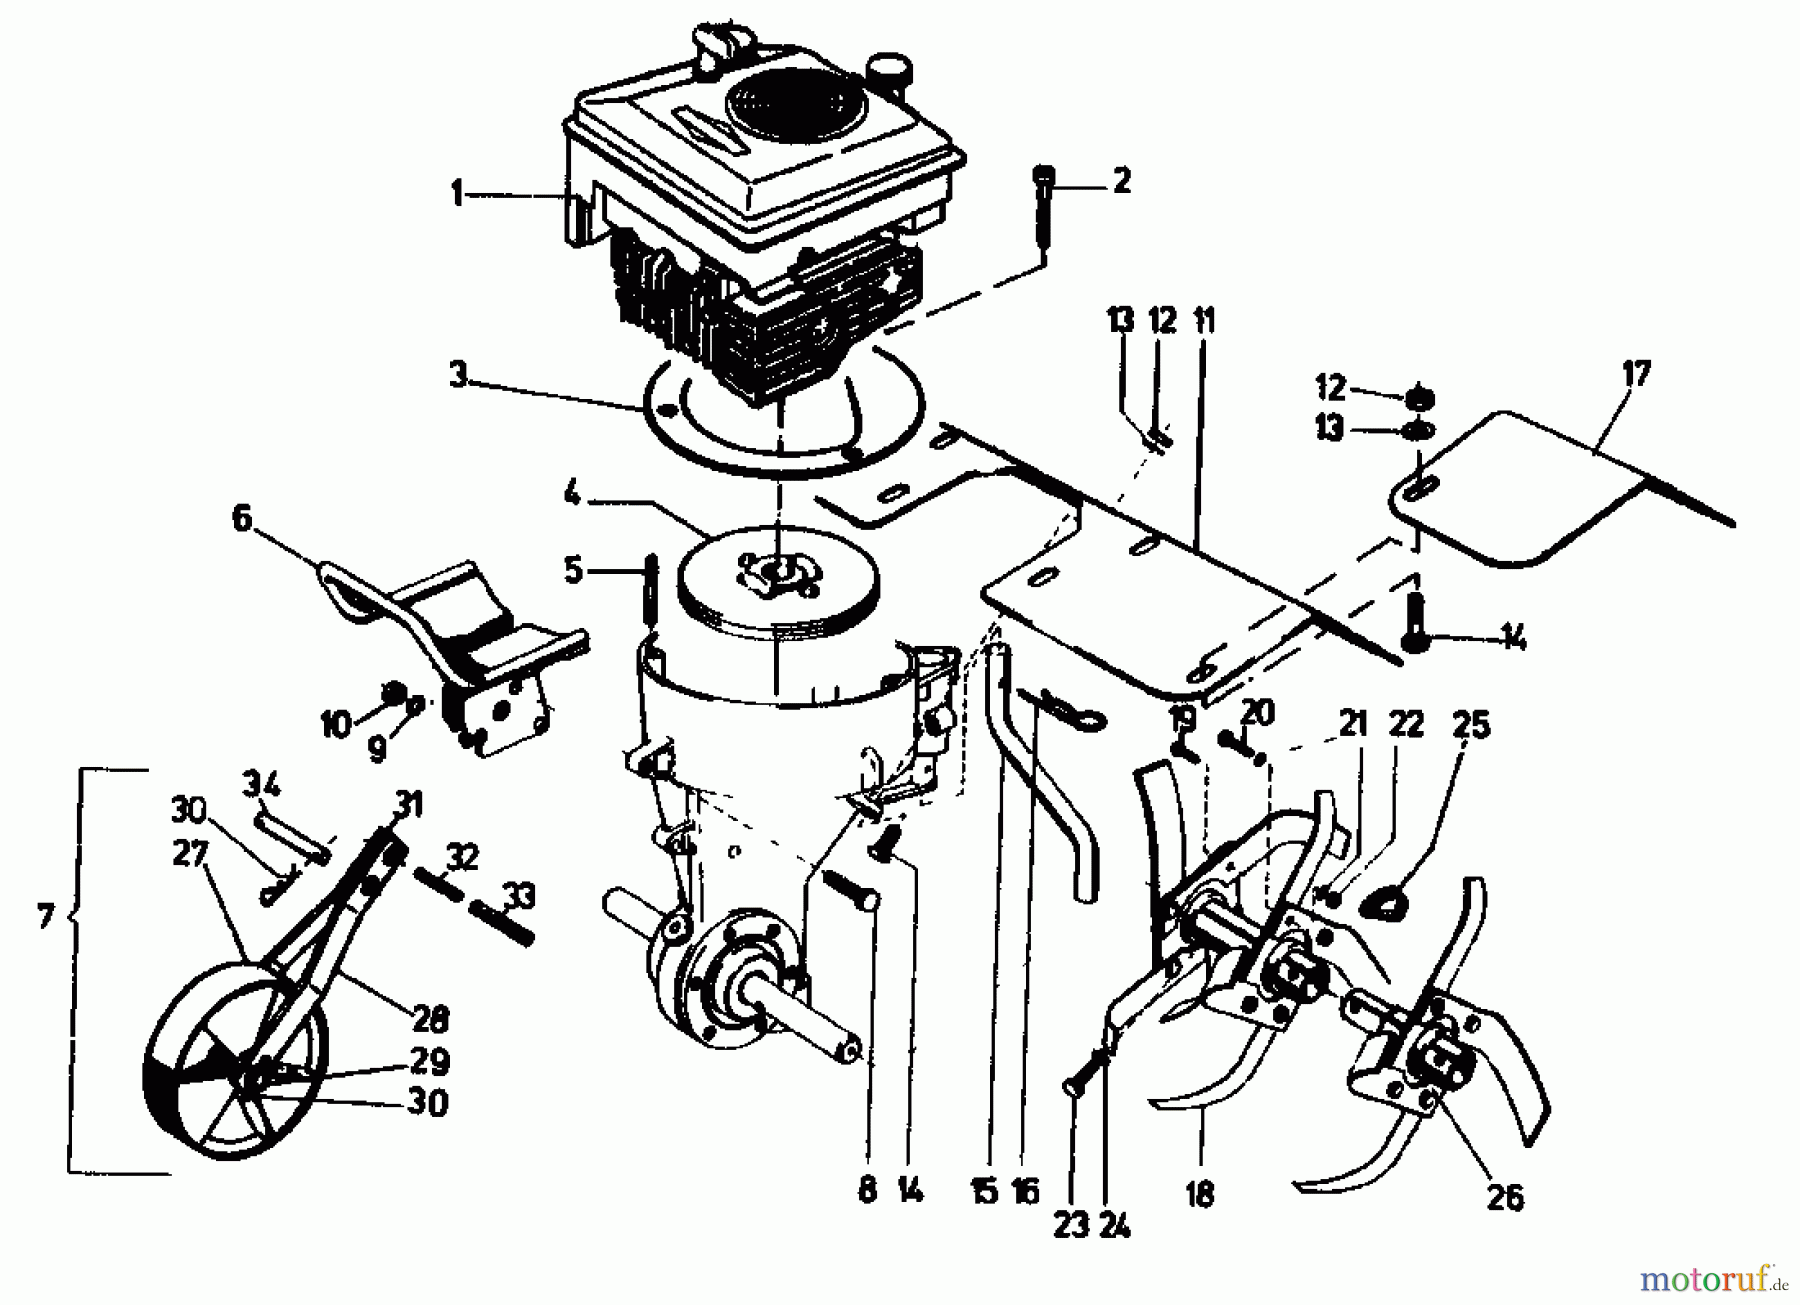  Gutbrod Motobineuse MB 65-35 07516.01  (1989) Machine de base